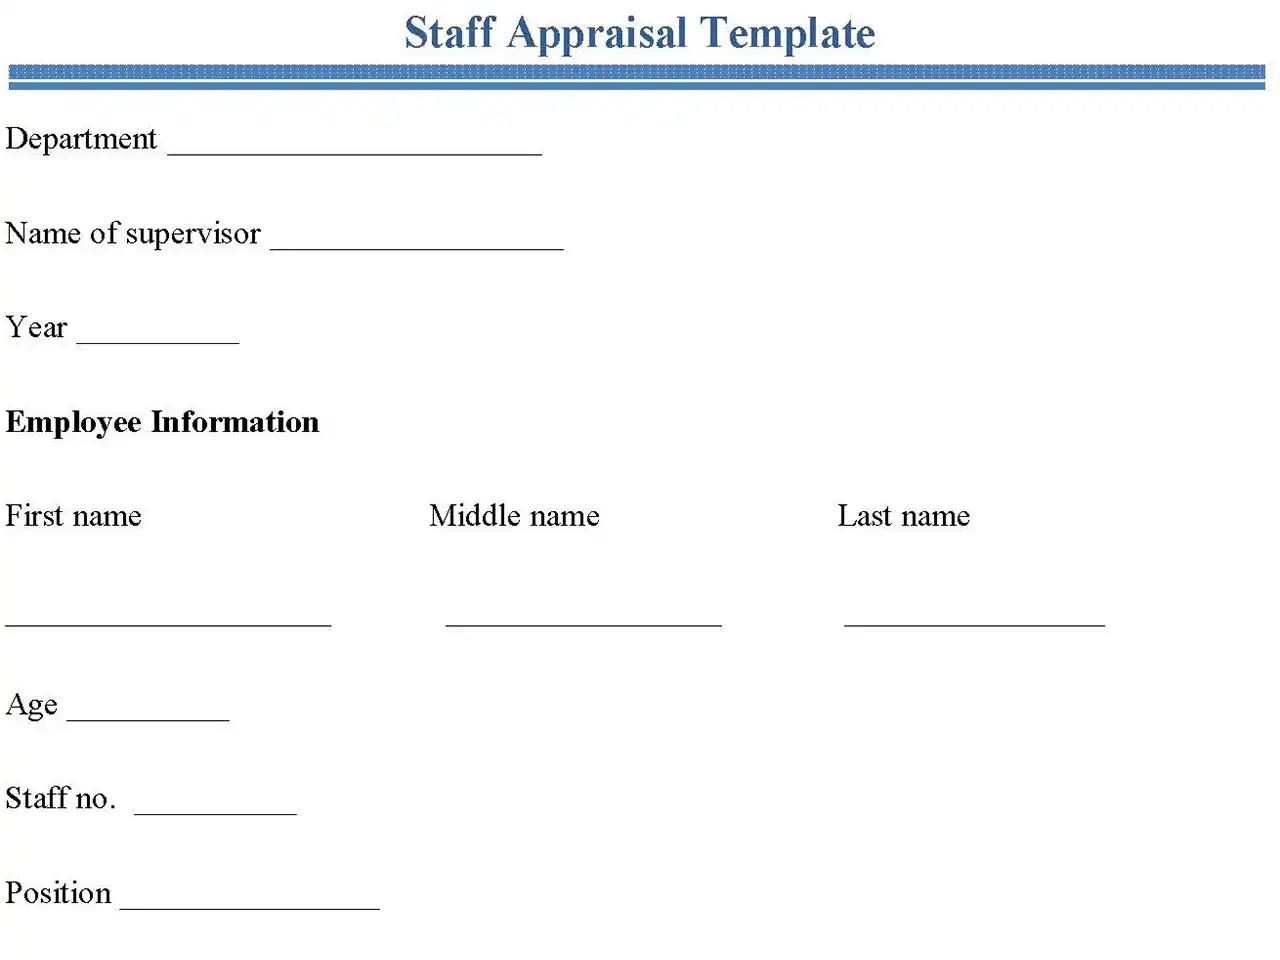 Staff Appraisal PDF Template